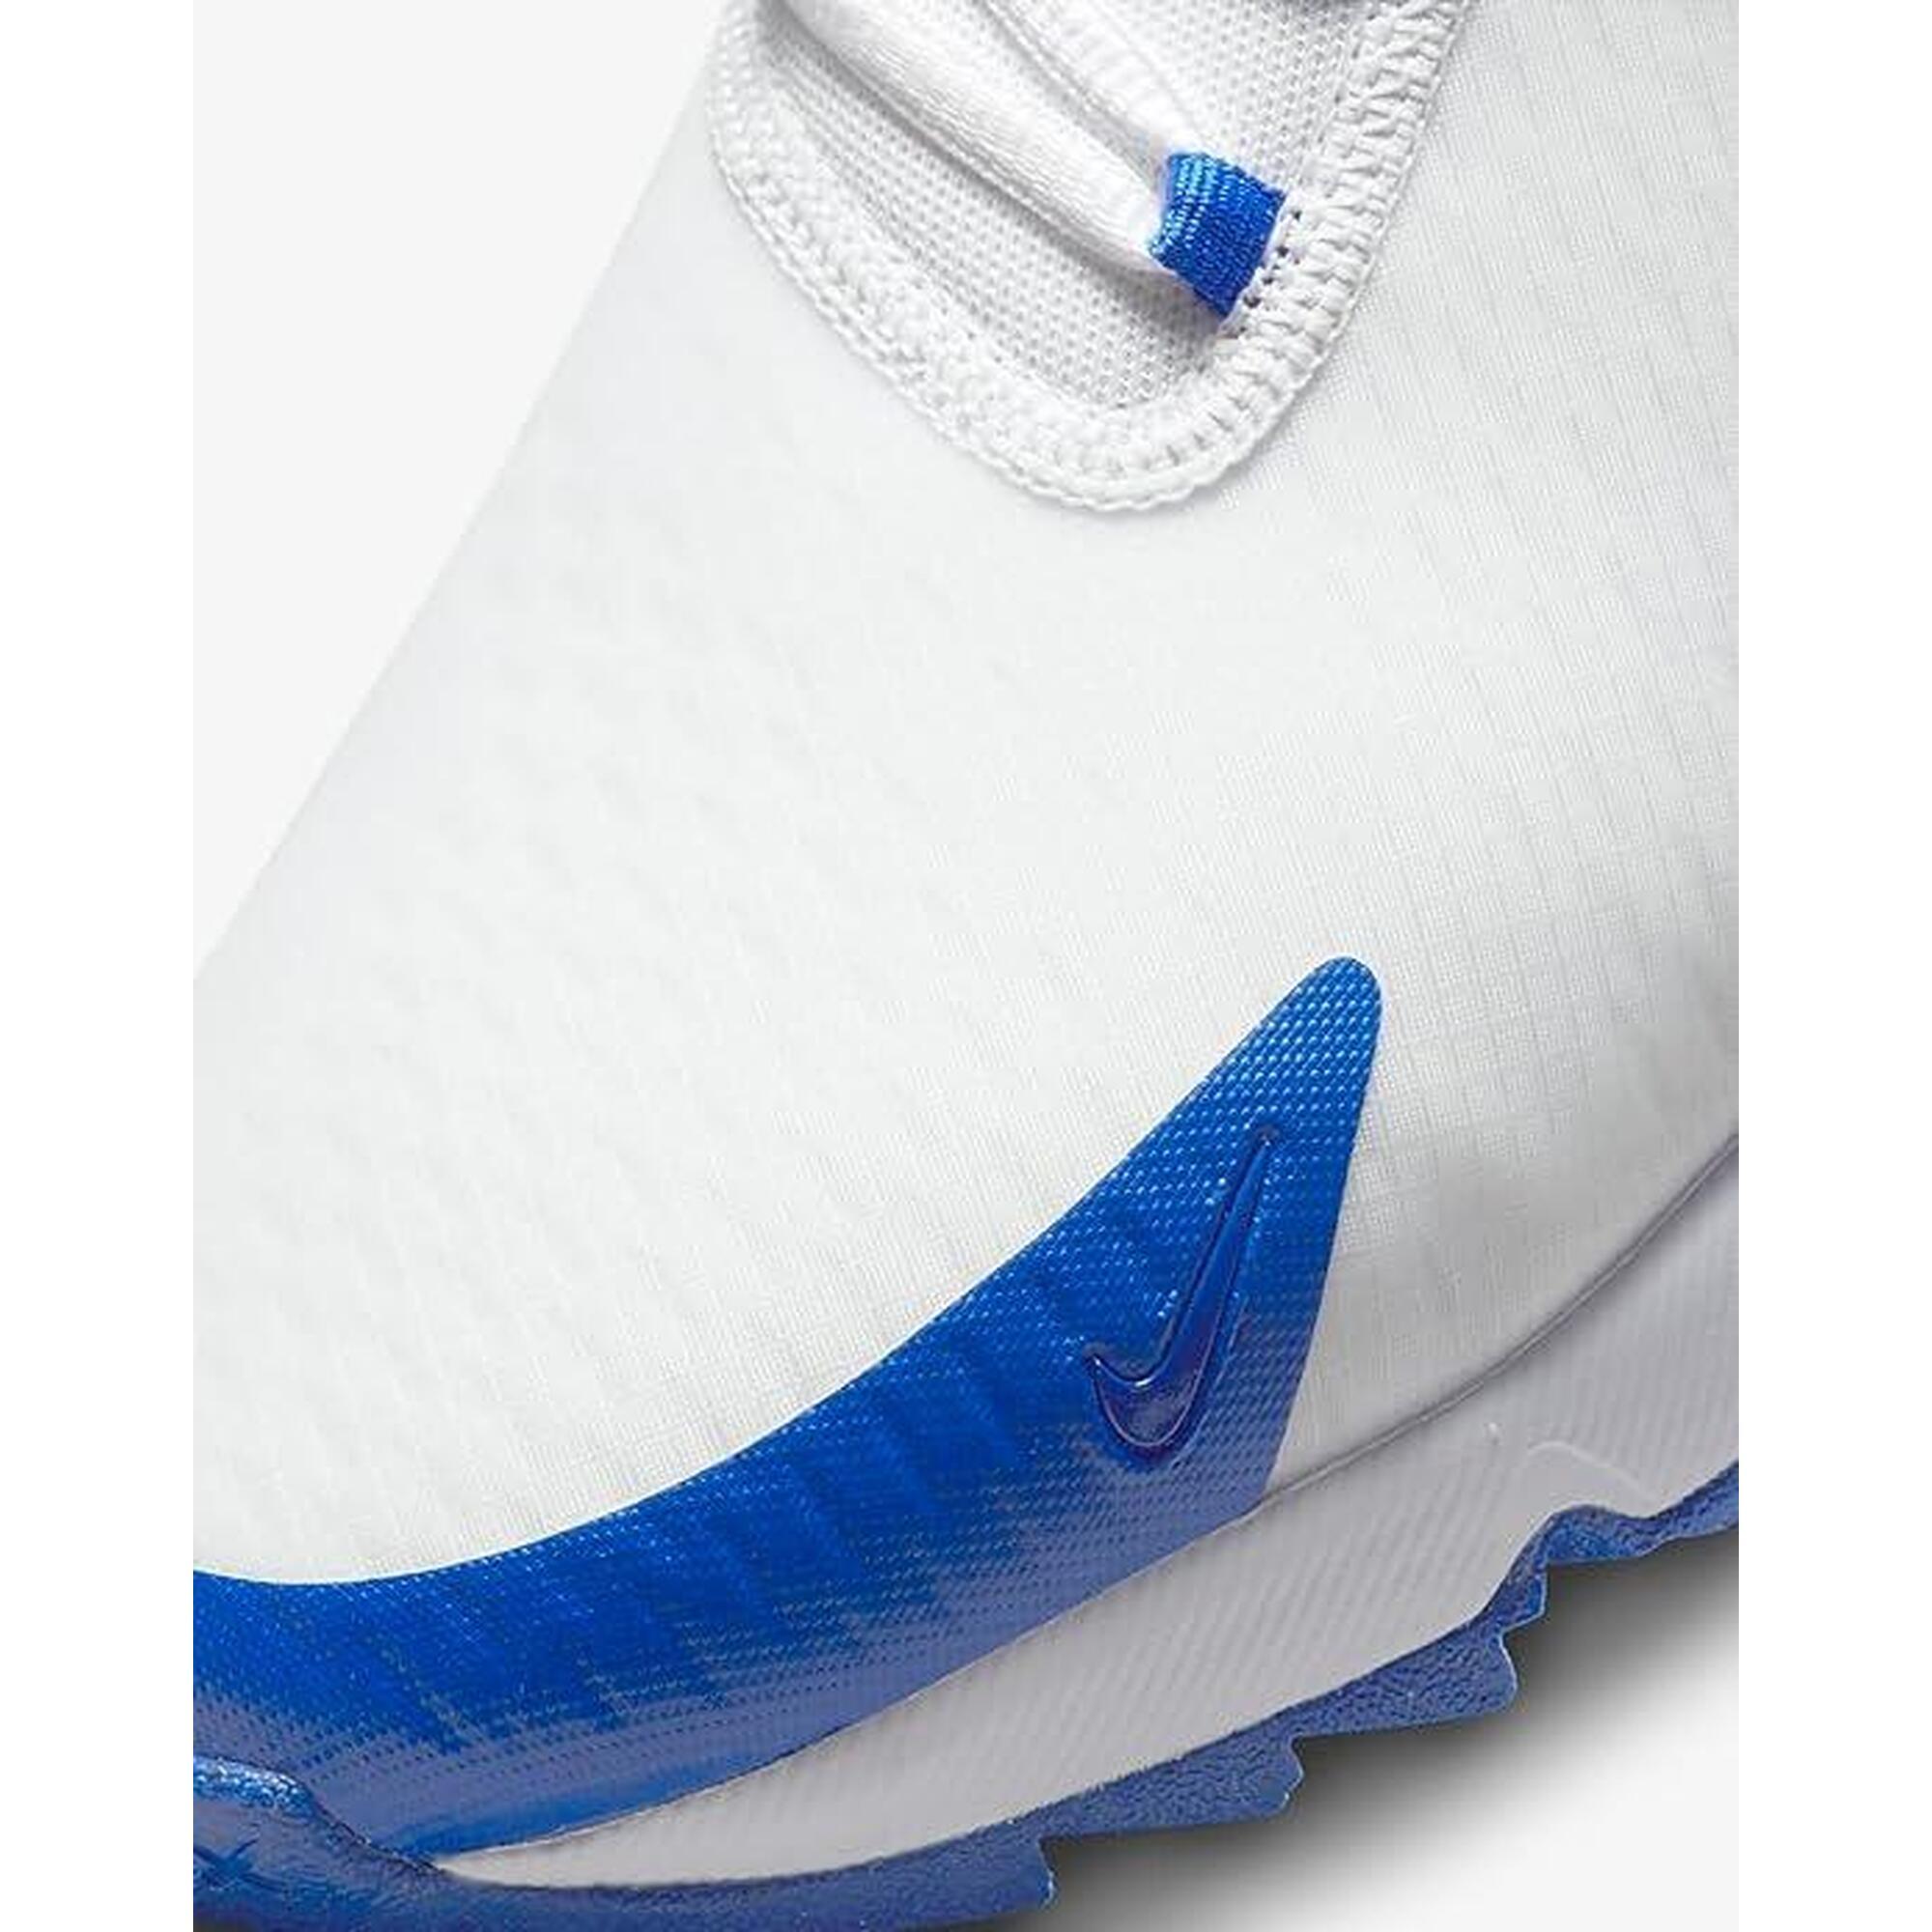 Zapatillas deportivas de golf Nike Air Max 270G para Hombre